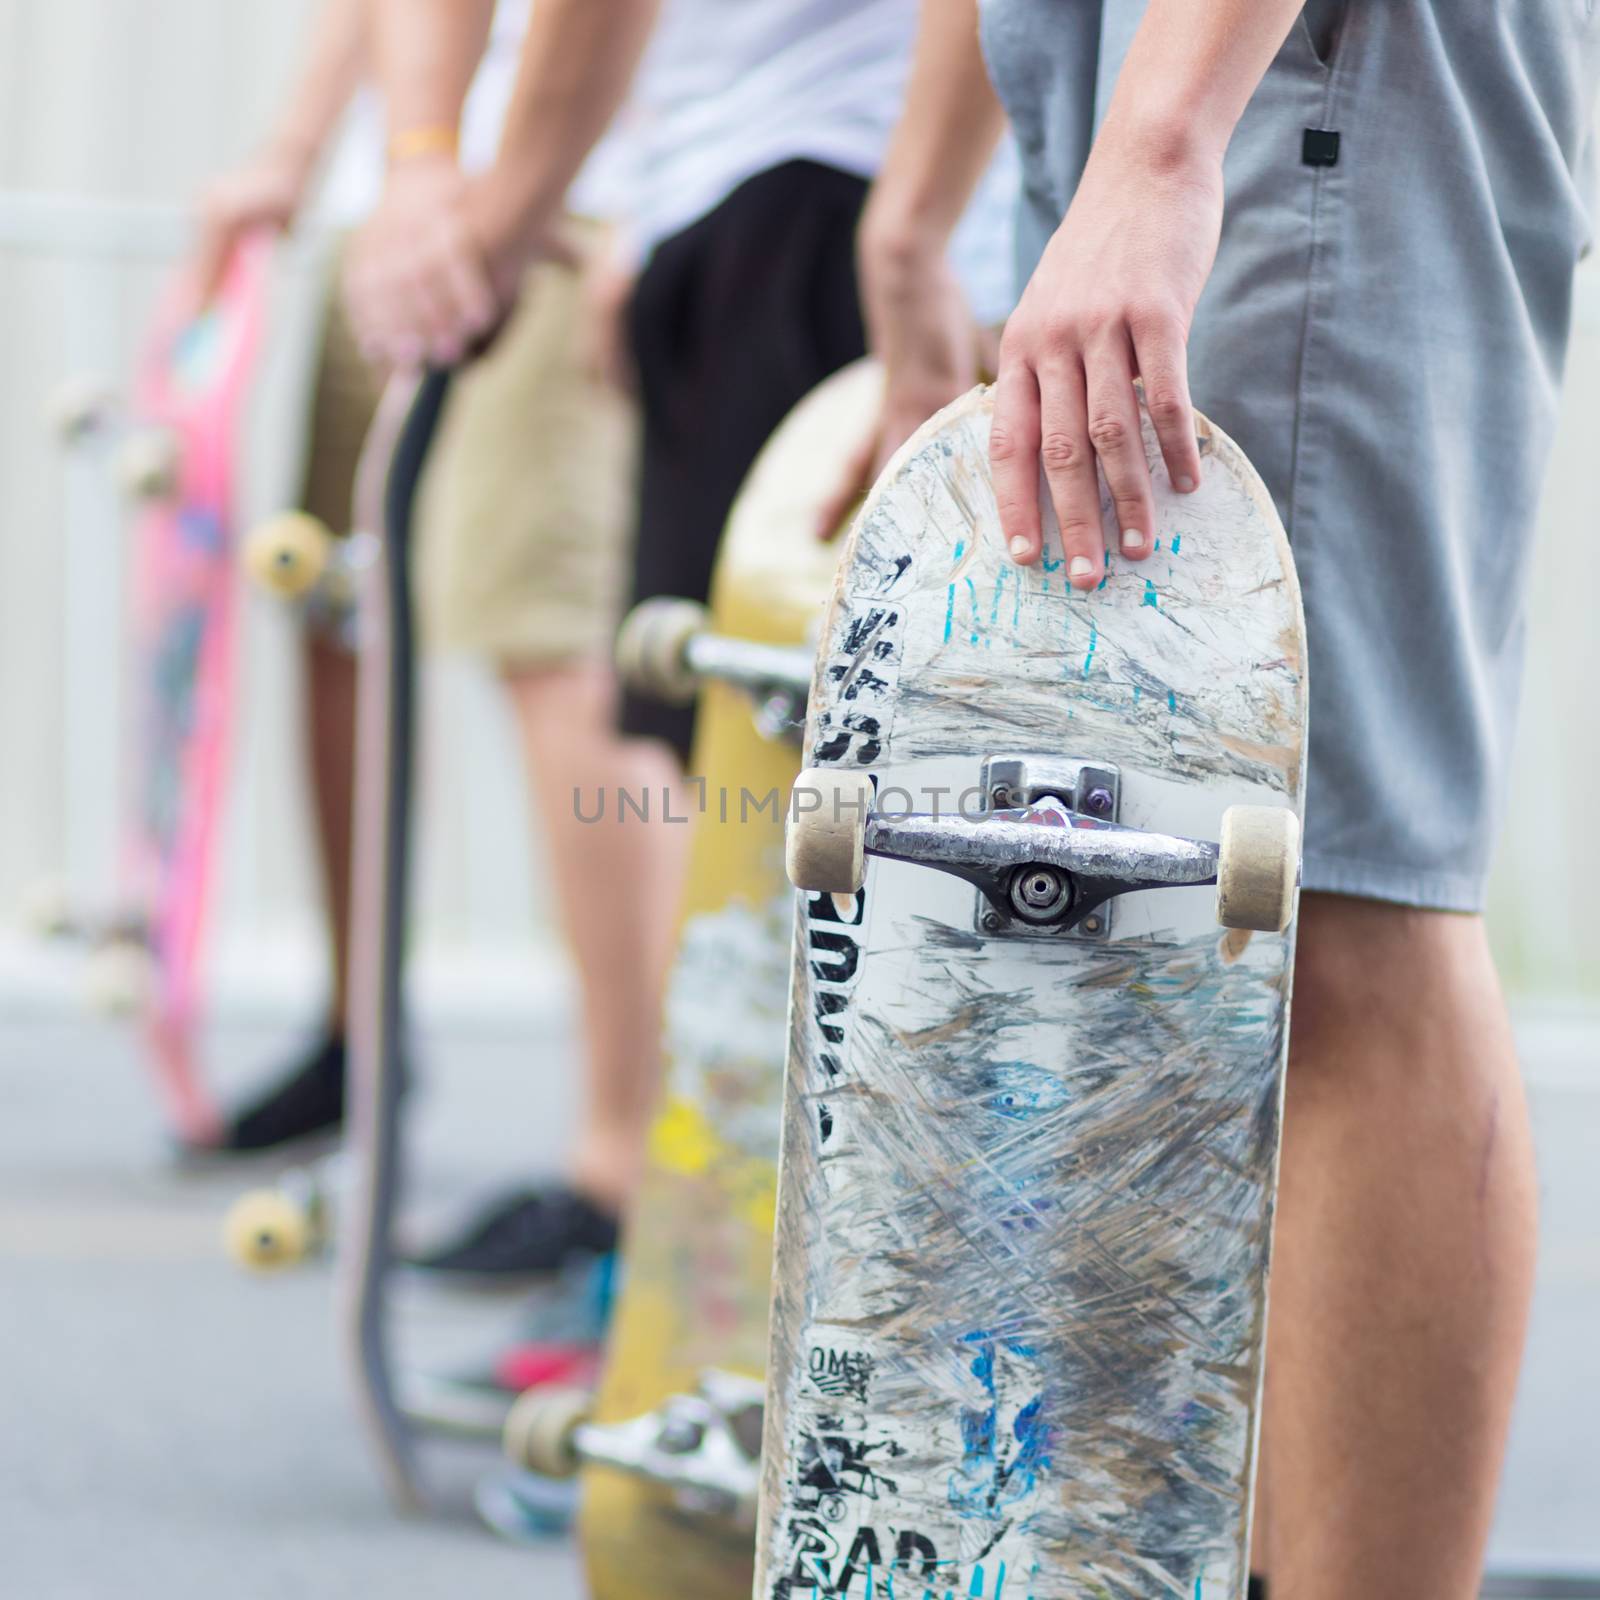 Boys skateboarding on street. Urban life. by kasto